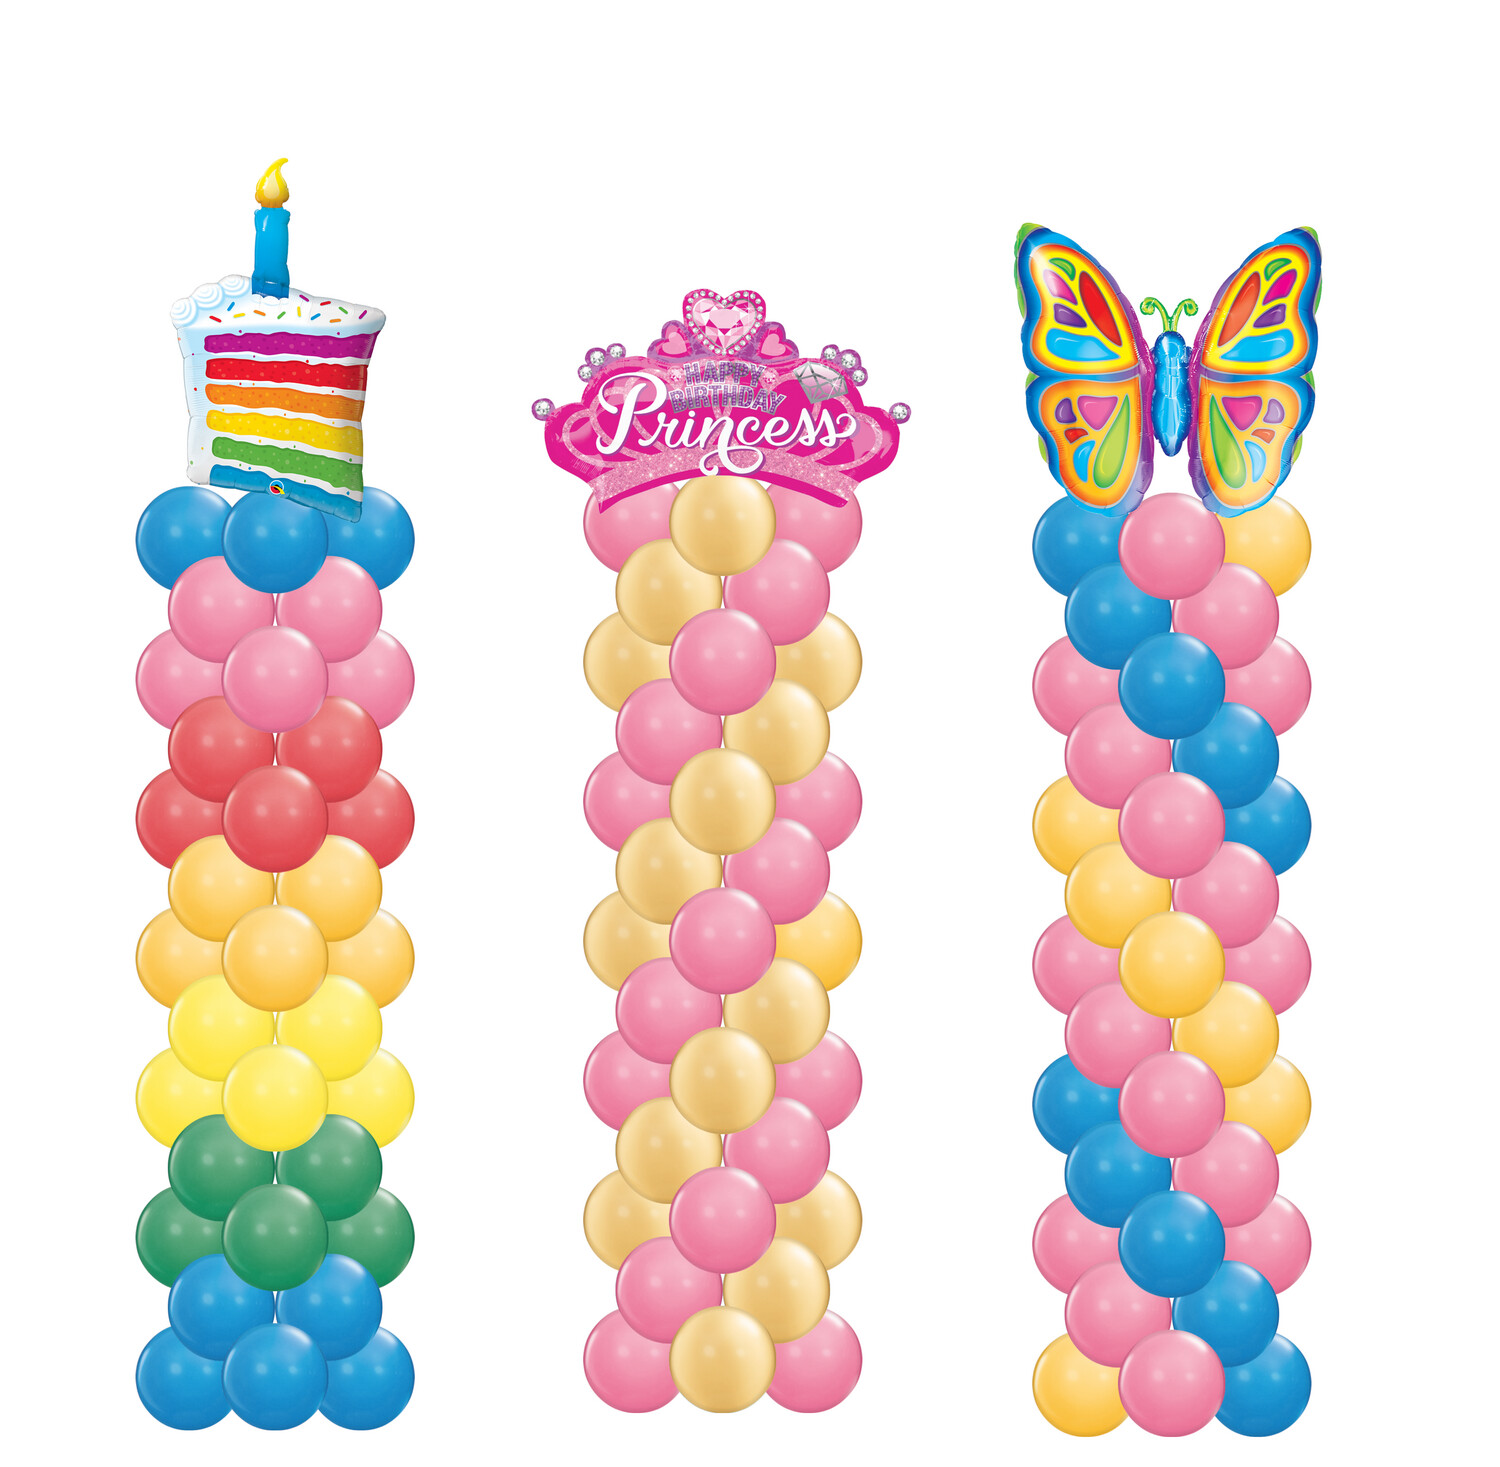 Big birthday balloon column, cake, birthday princess or butterfly